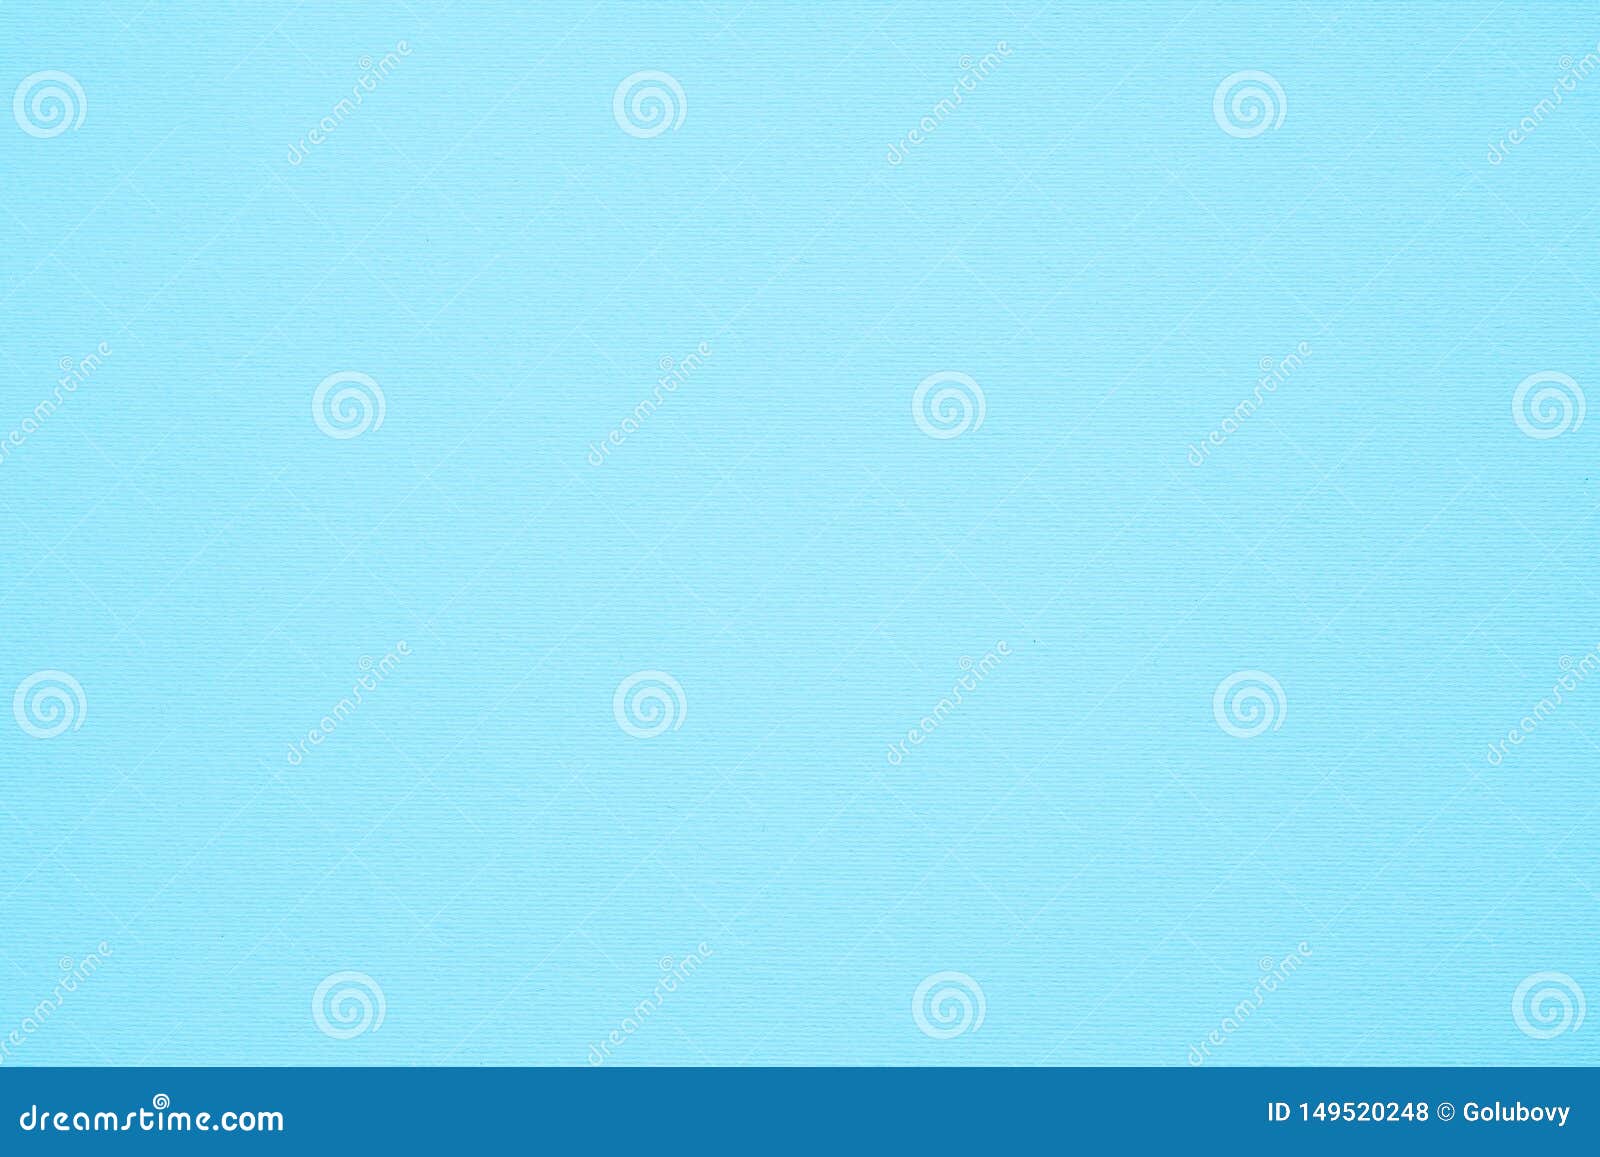 Aqua Blue Felt Texture Background Colored Carton Stock Photo - Image of ...